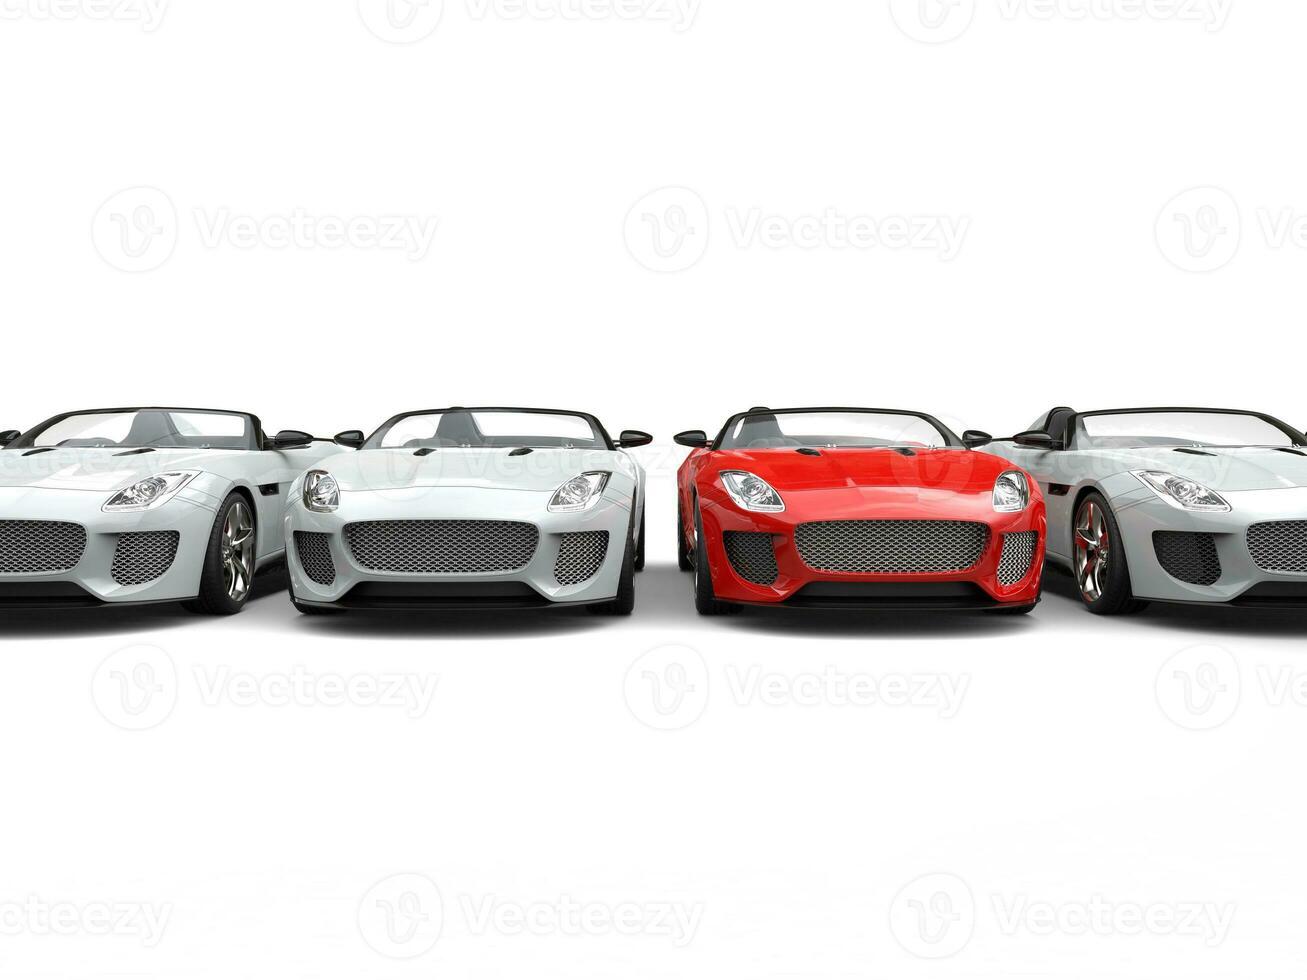 shiney ny röd sporter bil stående ut i en rad av vit sporter bilar foto